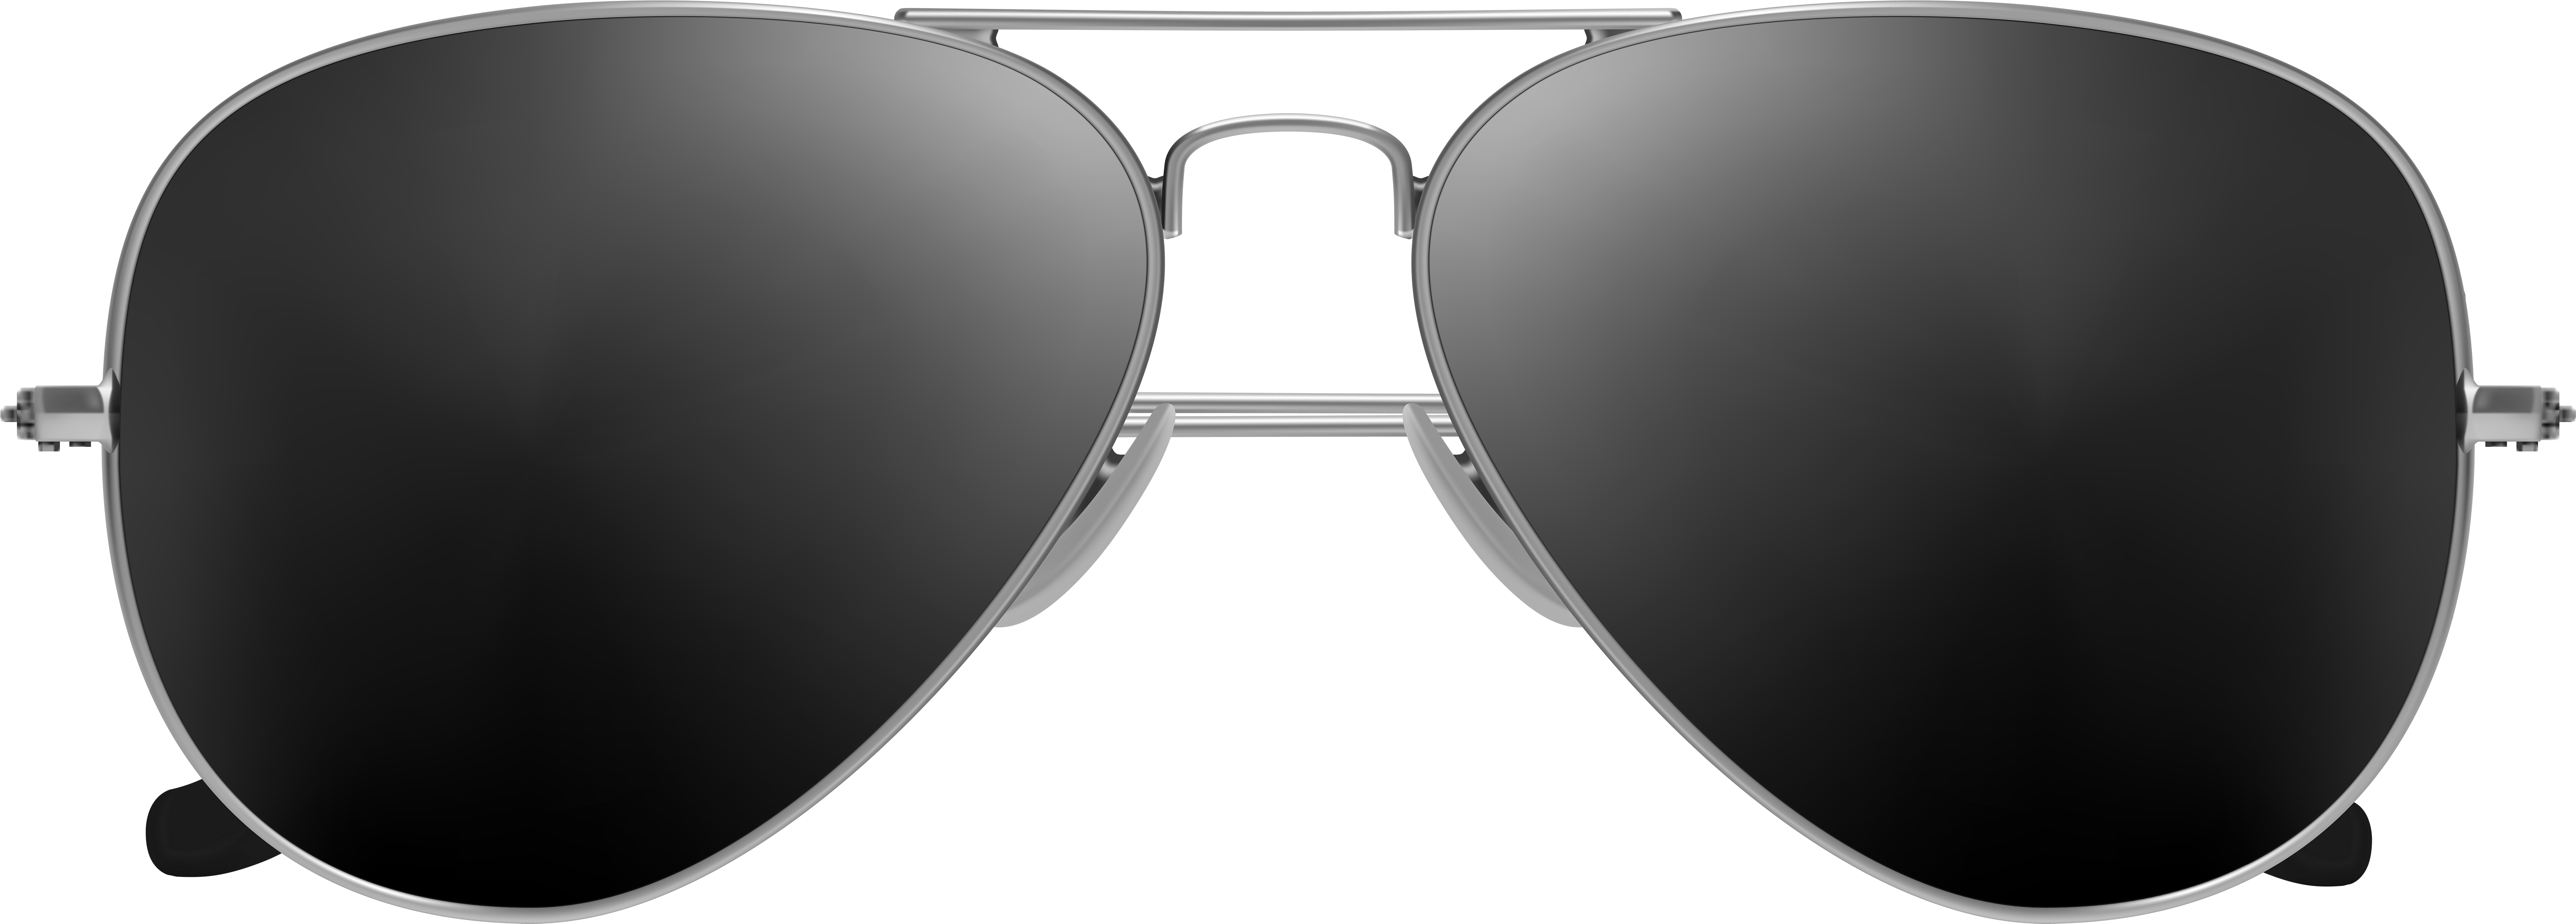 Details 200 sunglasses transparent background - Abzlocal.mx